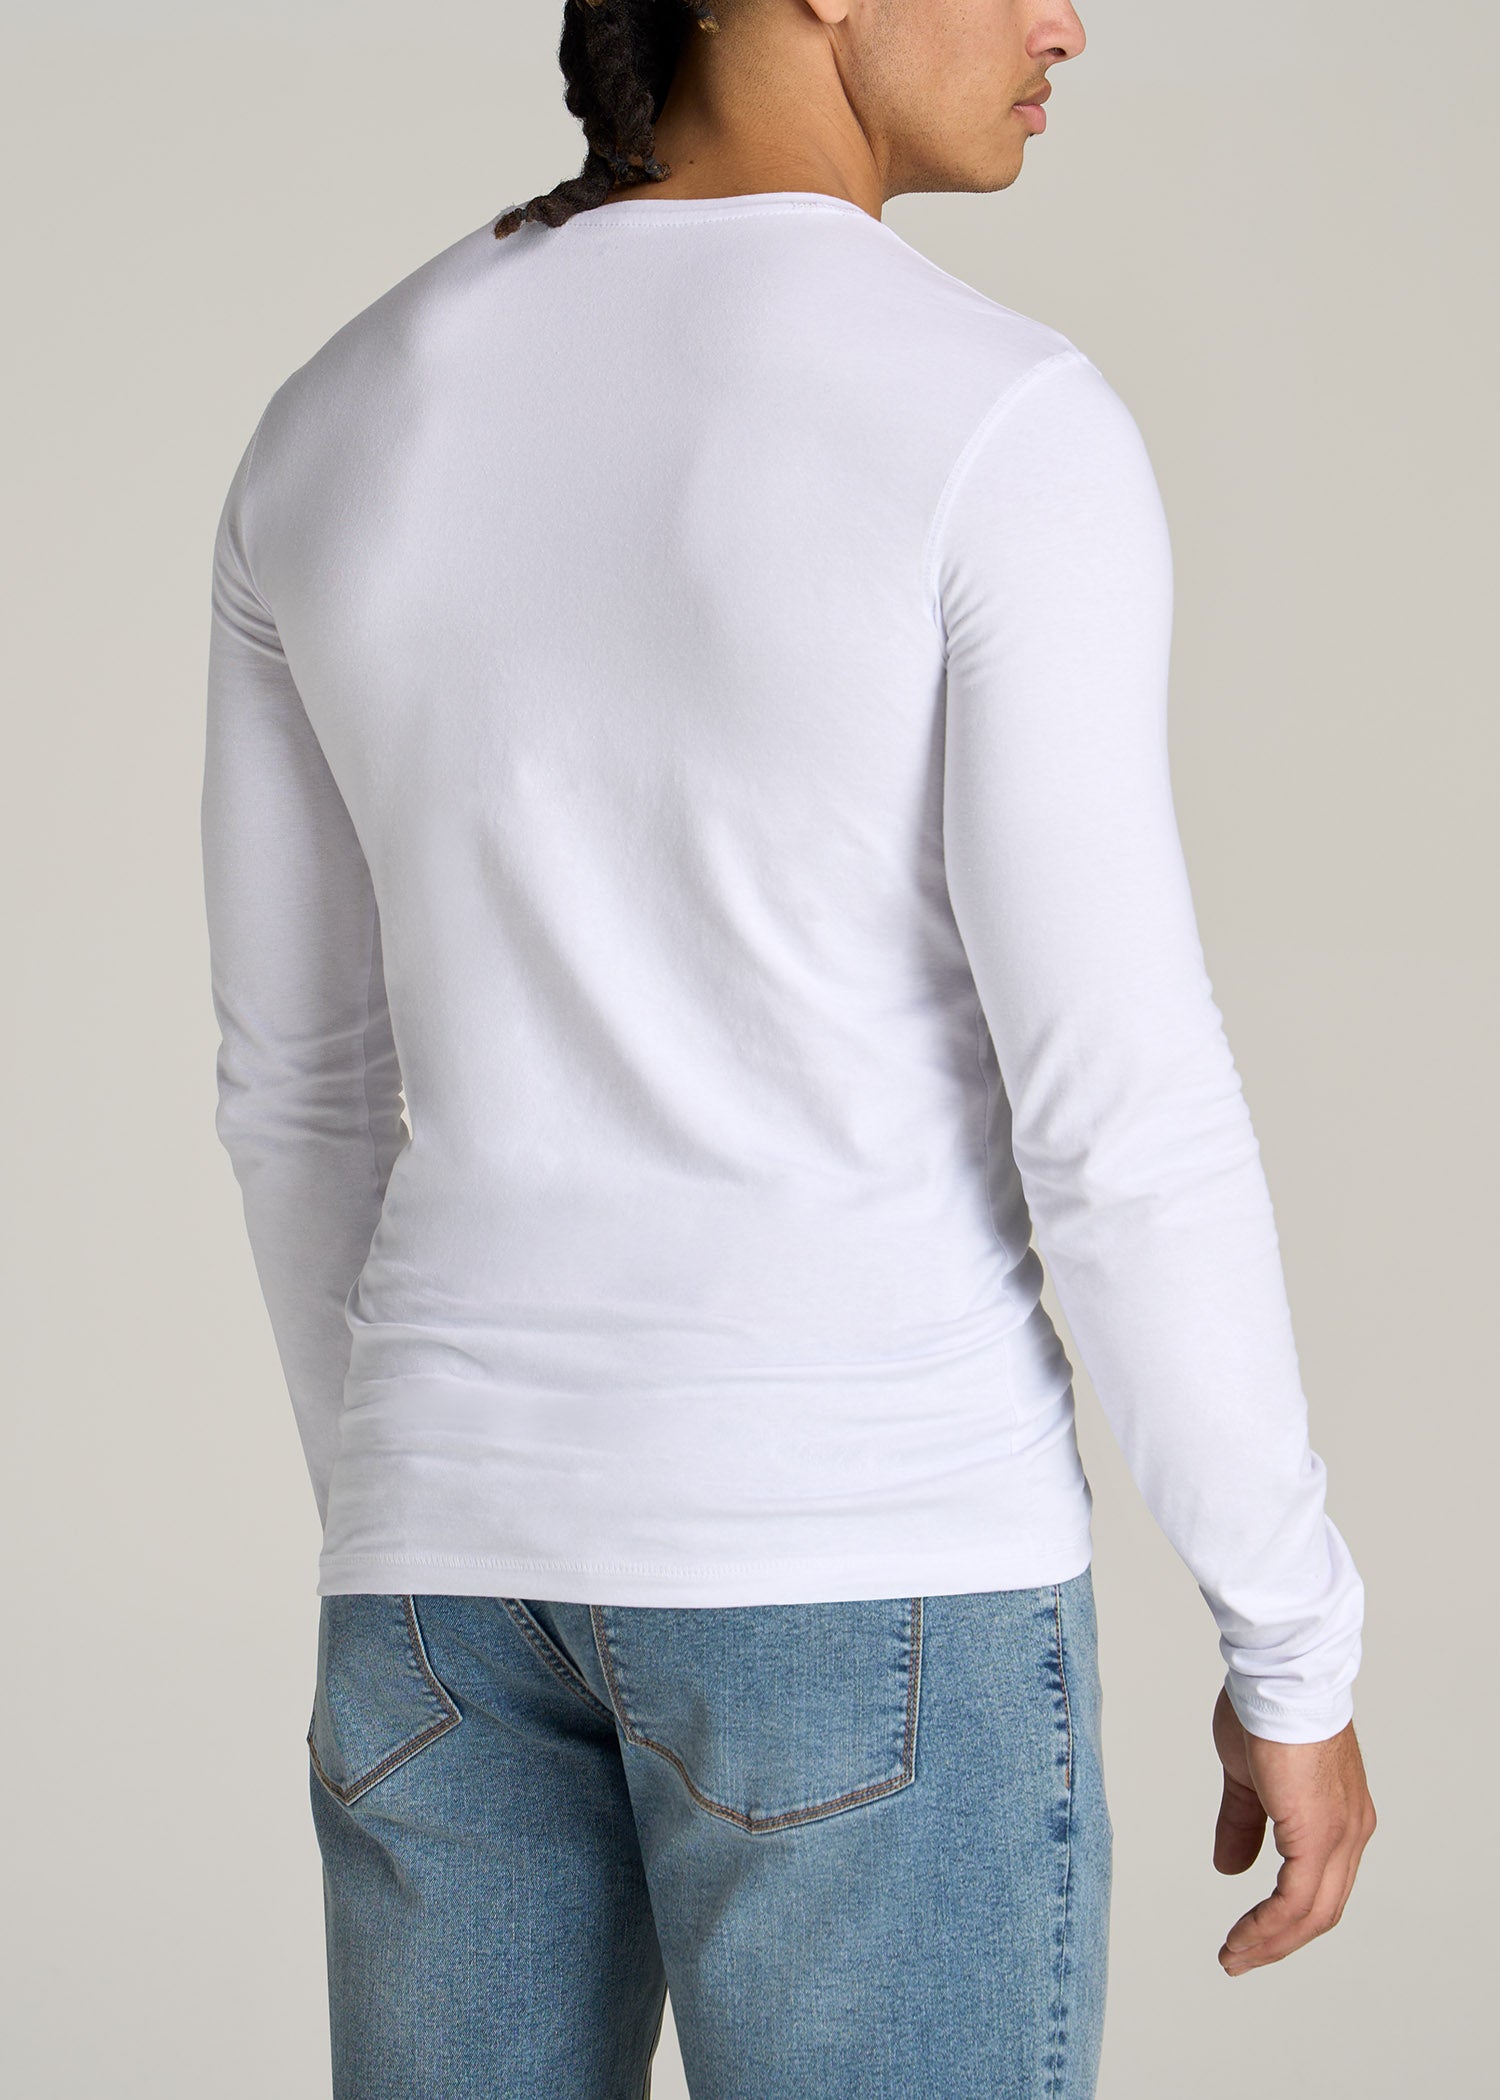 Slim Long Sleeve T Shirt: Tall Men's Slim Fit White Tee – American Tall